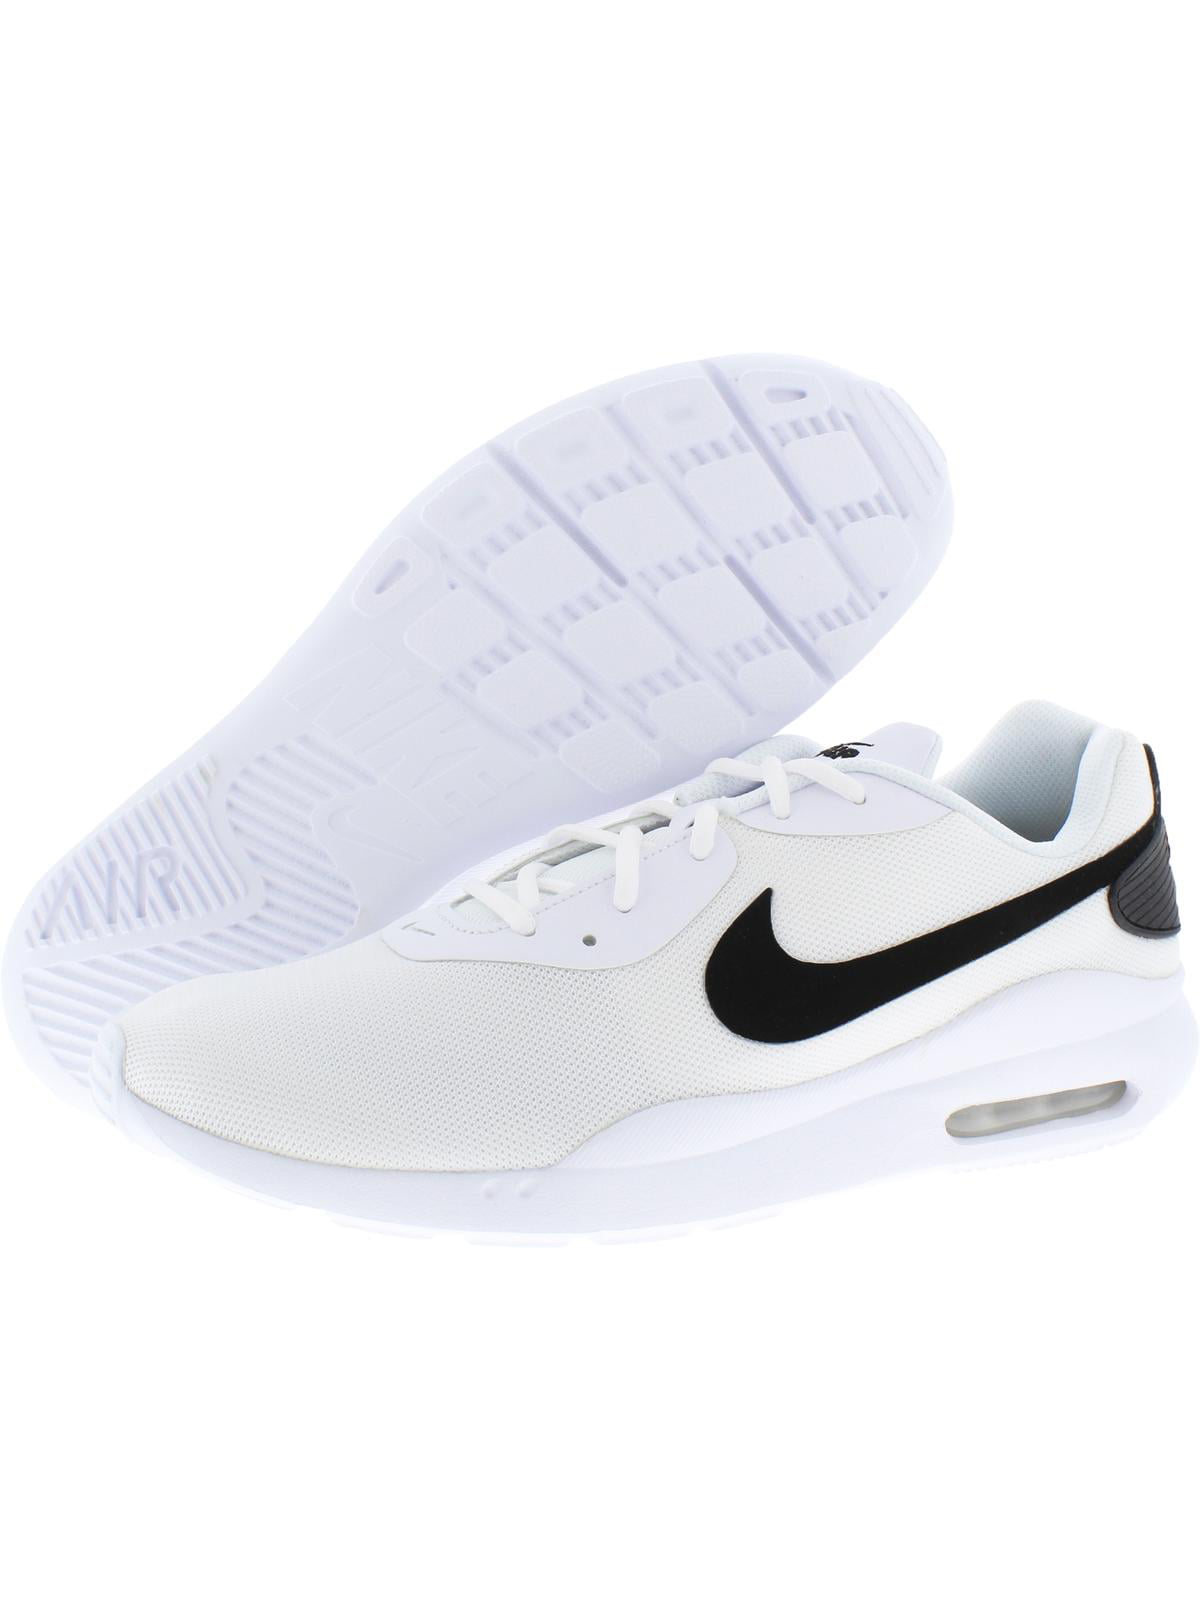 Nike Air Max Oketo Sneaker, White/Black, Regular US - Walmart.com